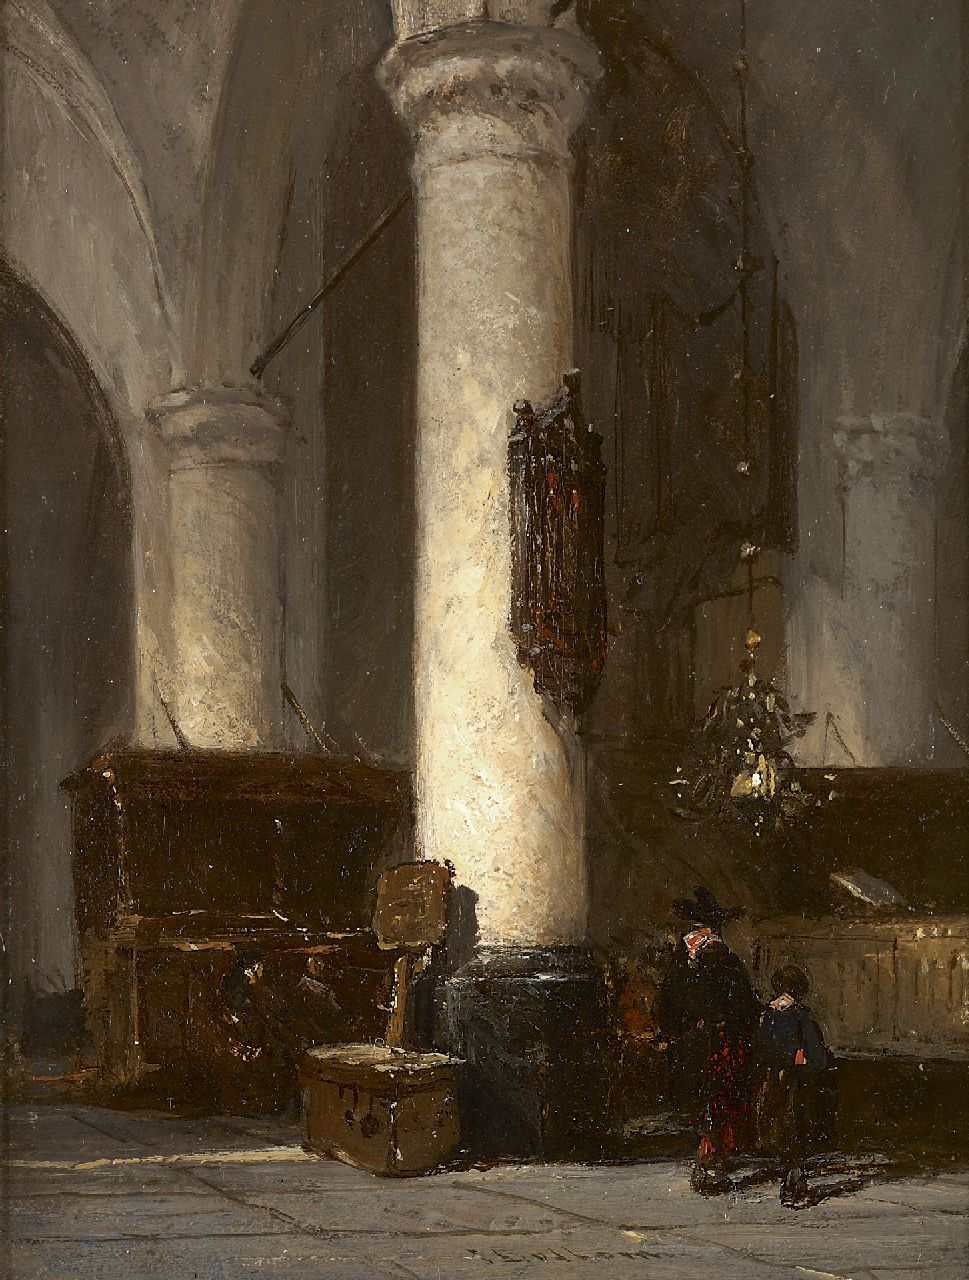 Bosboom J.  | Johannes Bosboom, Interieur van de Hervormde Kerk te Hattem, olieverf op paneel 17,6 x 13,4 cm, gesigneerd middenonder